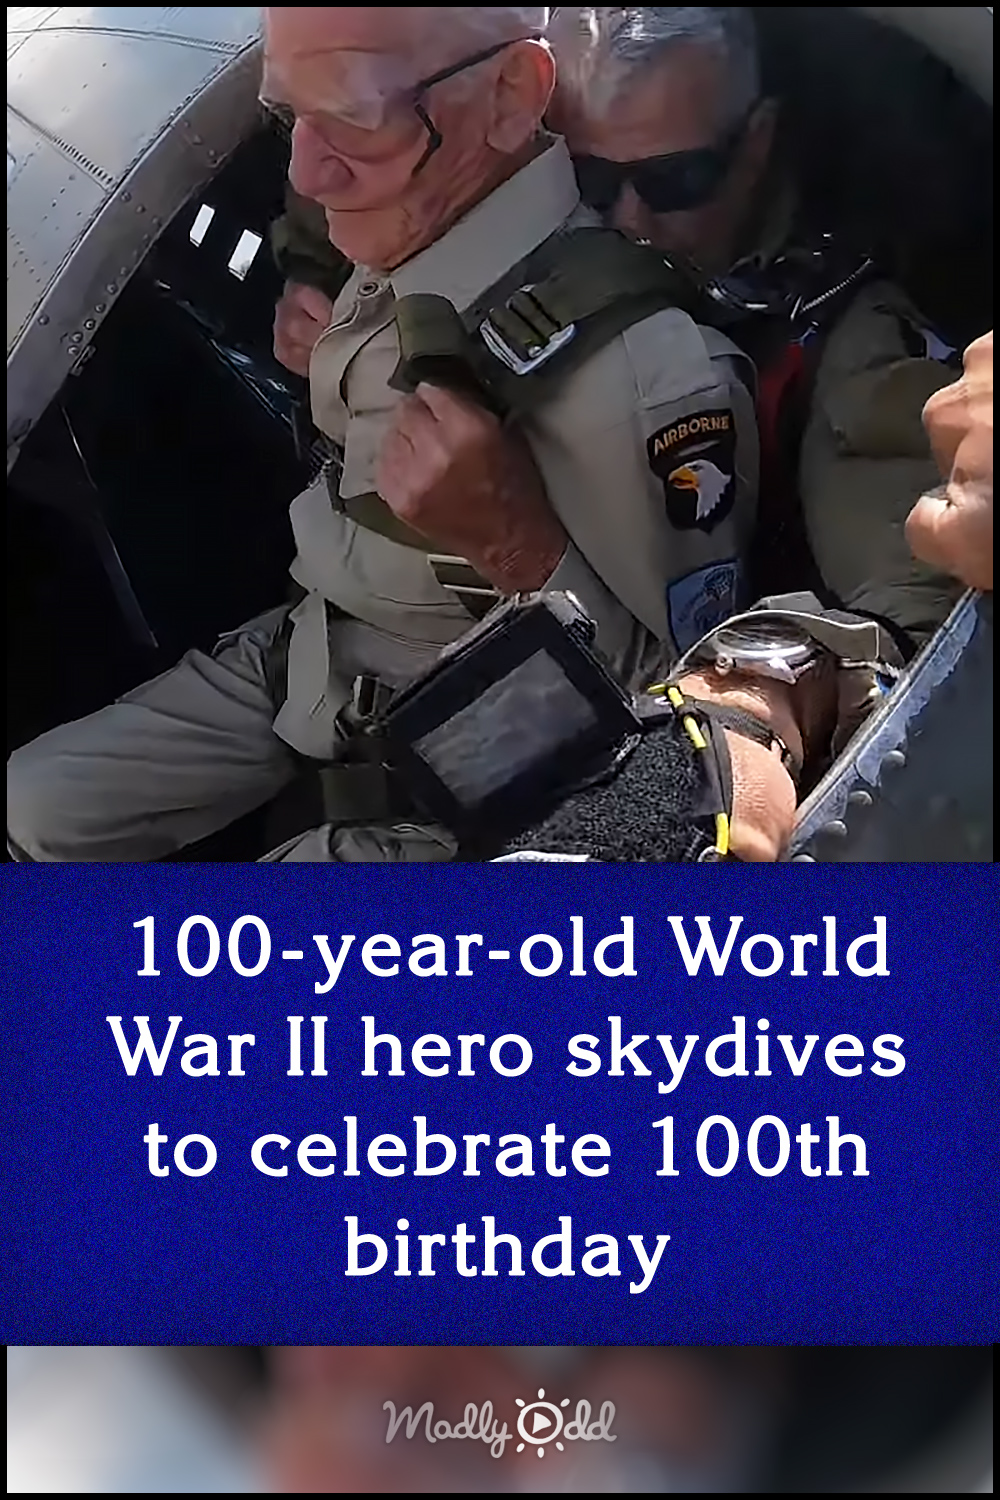 100-year-old World War II hero skydives to celebrate 100th birthday